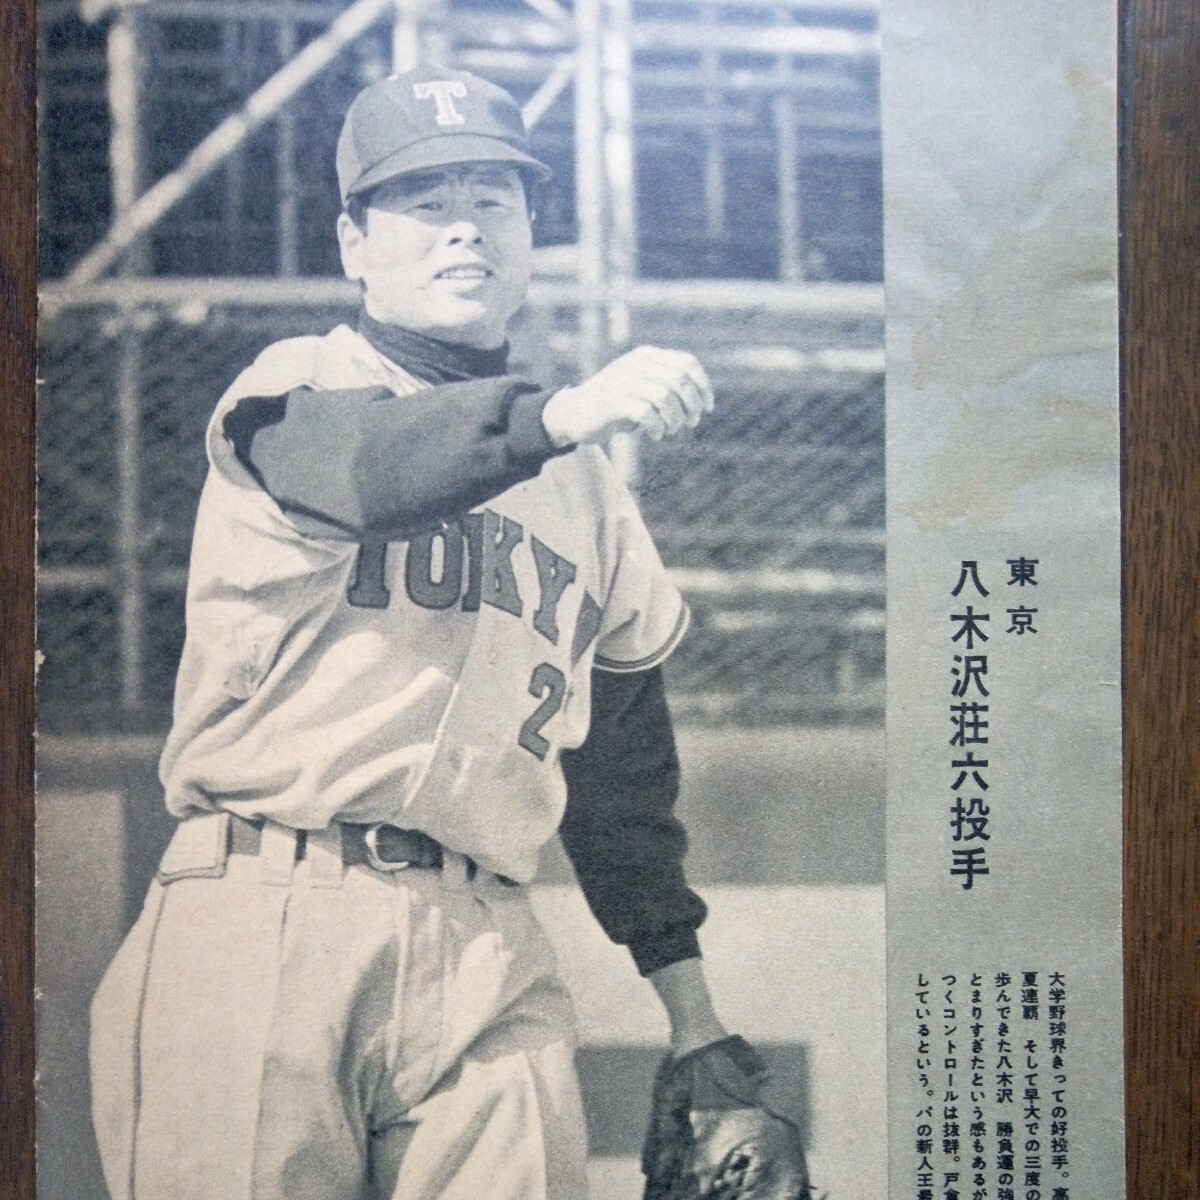 1967 year Professional Baseball player name .